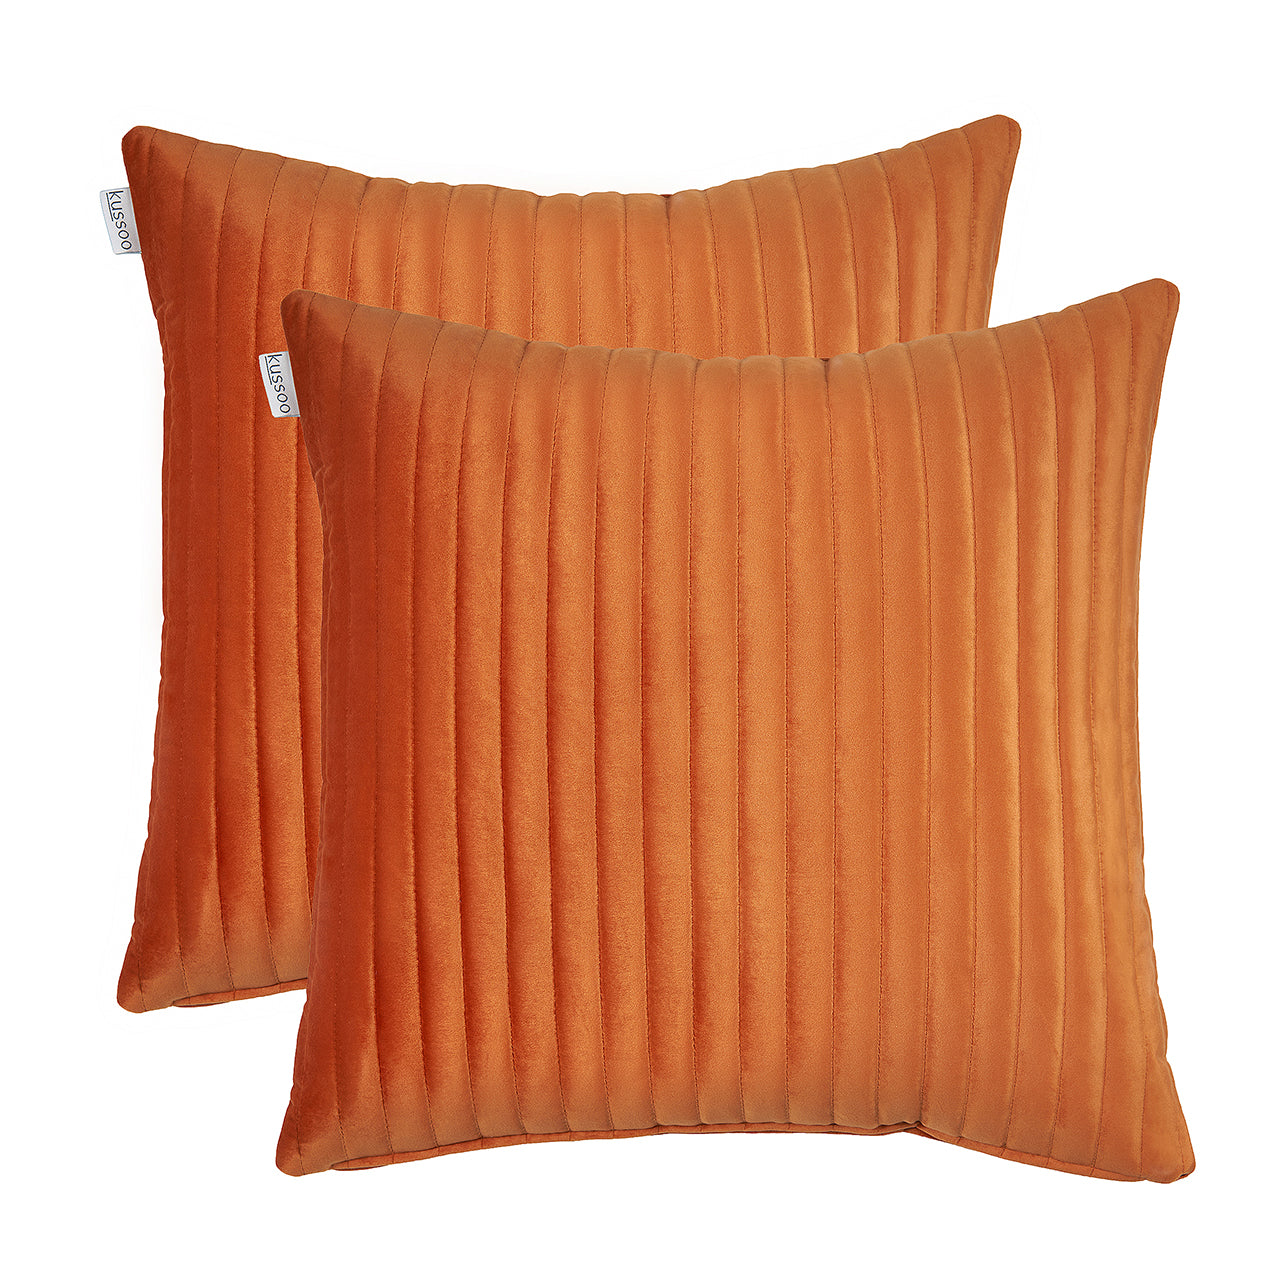 Kussenset-fluweel-oranje-streep-50x50-cm